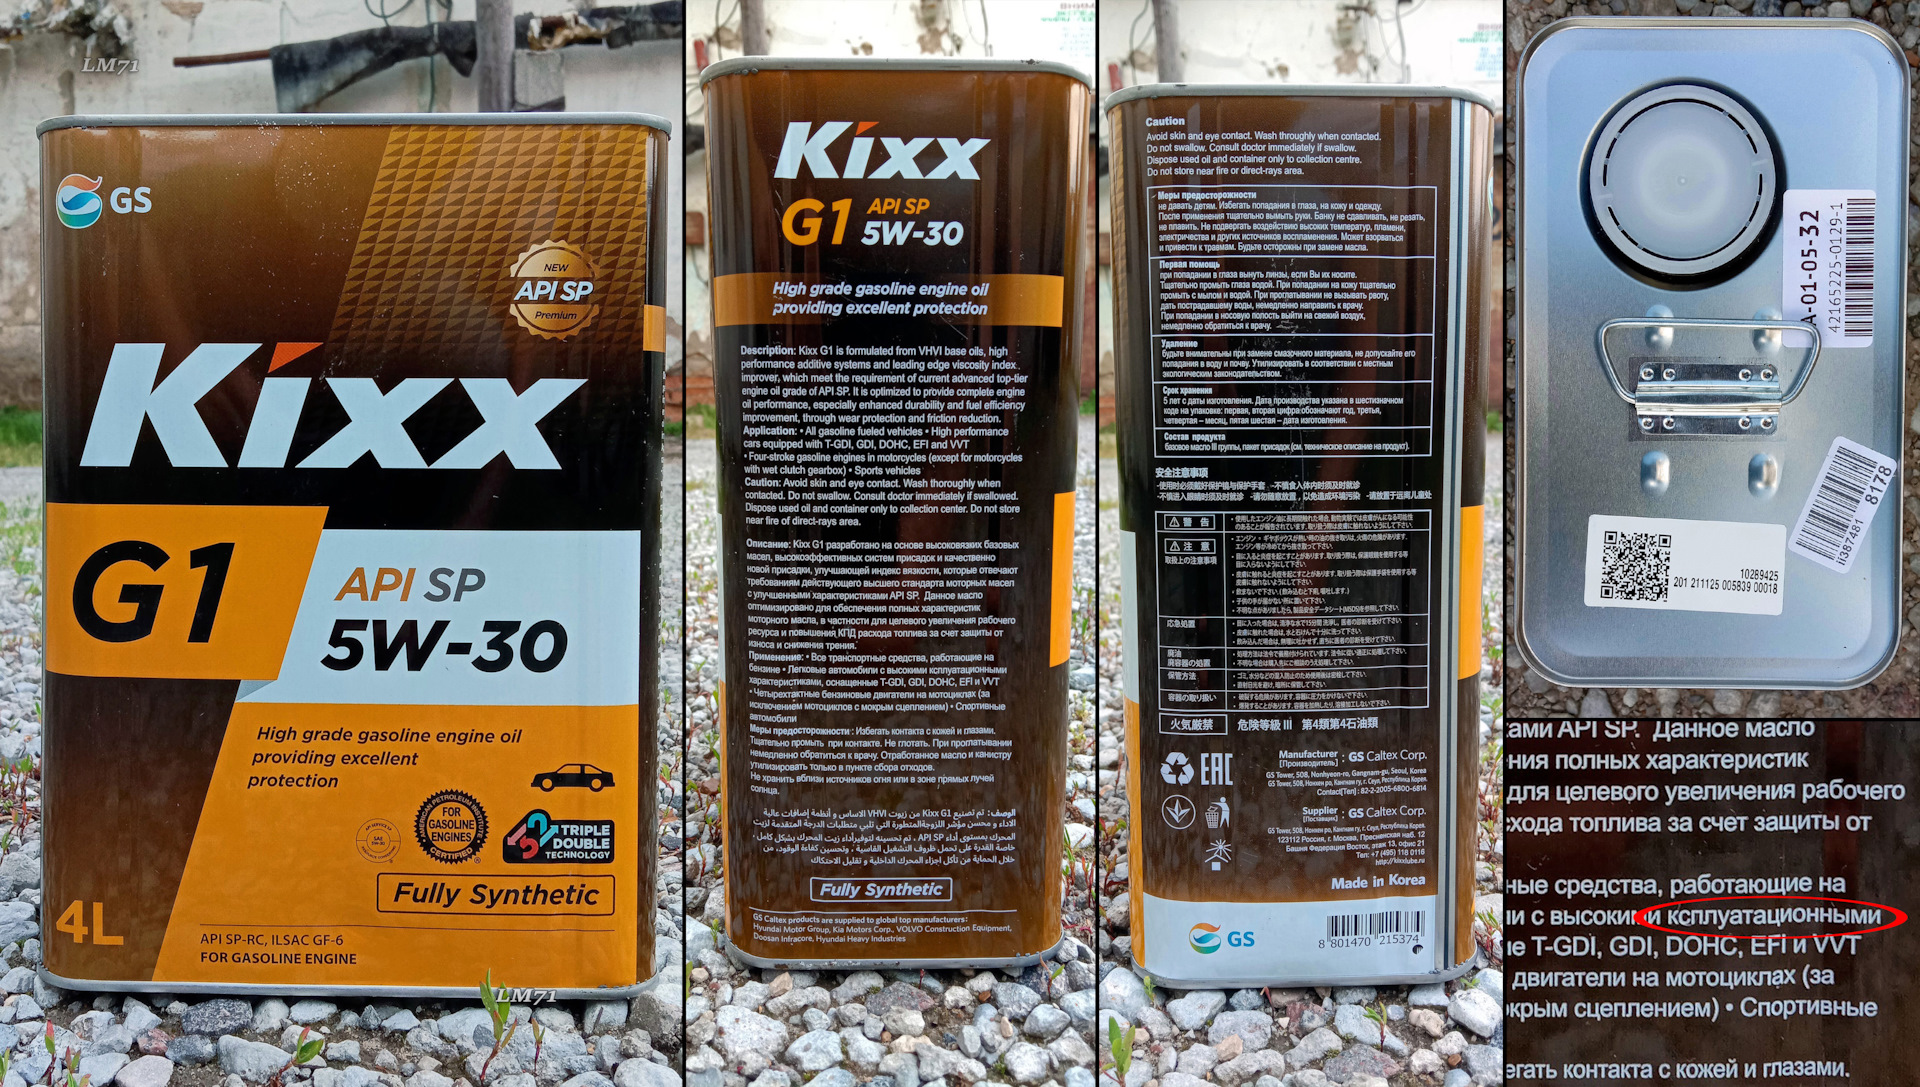 Масло kixx api sp. Kixx g1 5w-30 API SP. Кикс 5w30 API SP. L215344te1 Kixx. Kixx API SP.